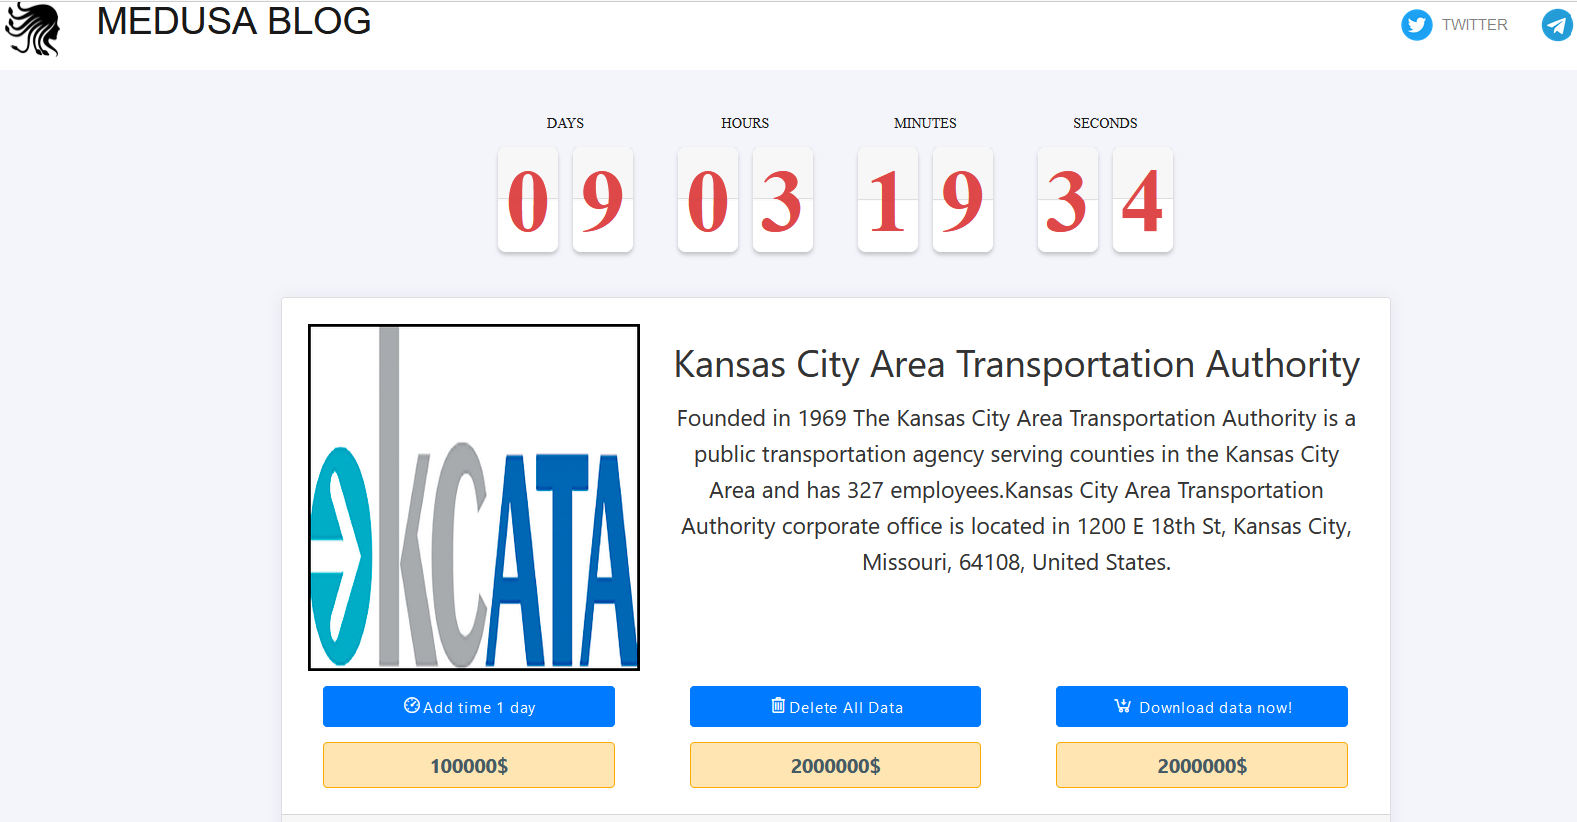 Medusa ransomware attack hit Kansas City Area Transportation Authority